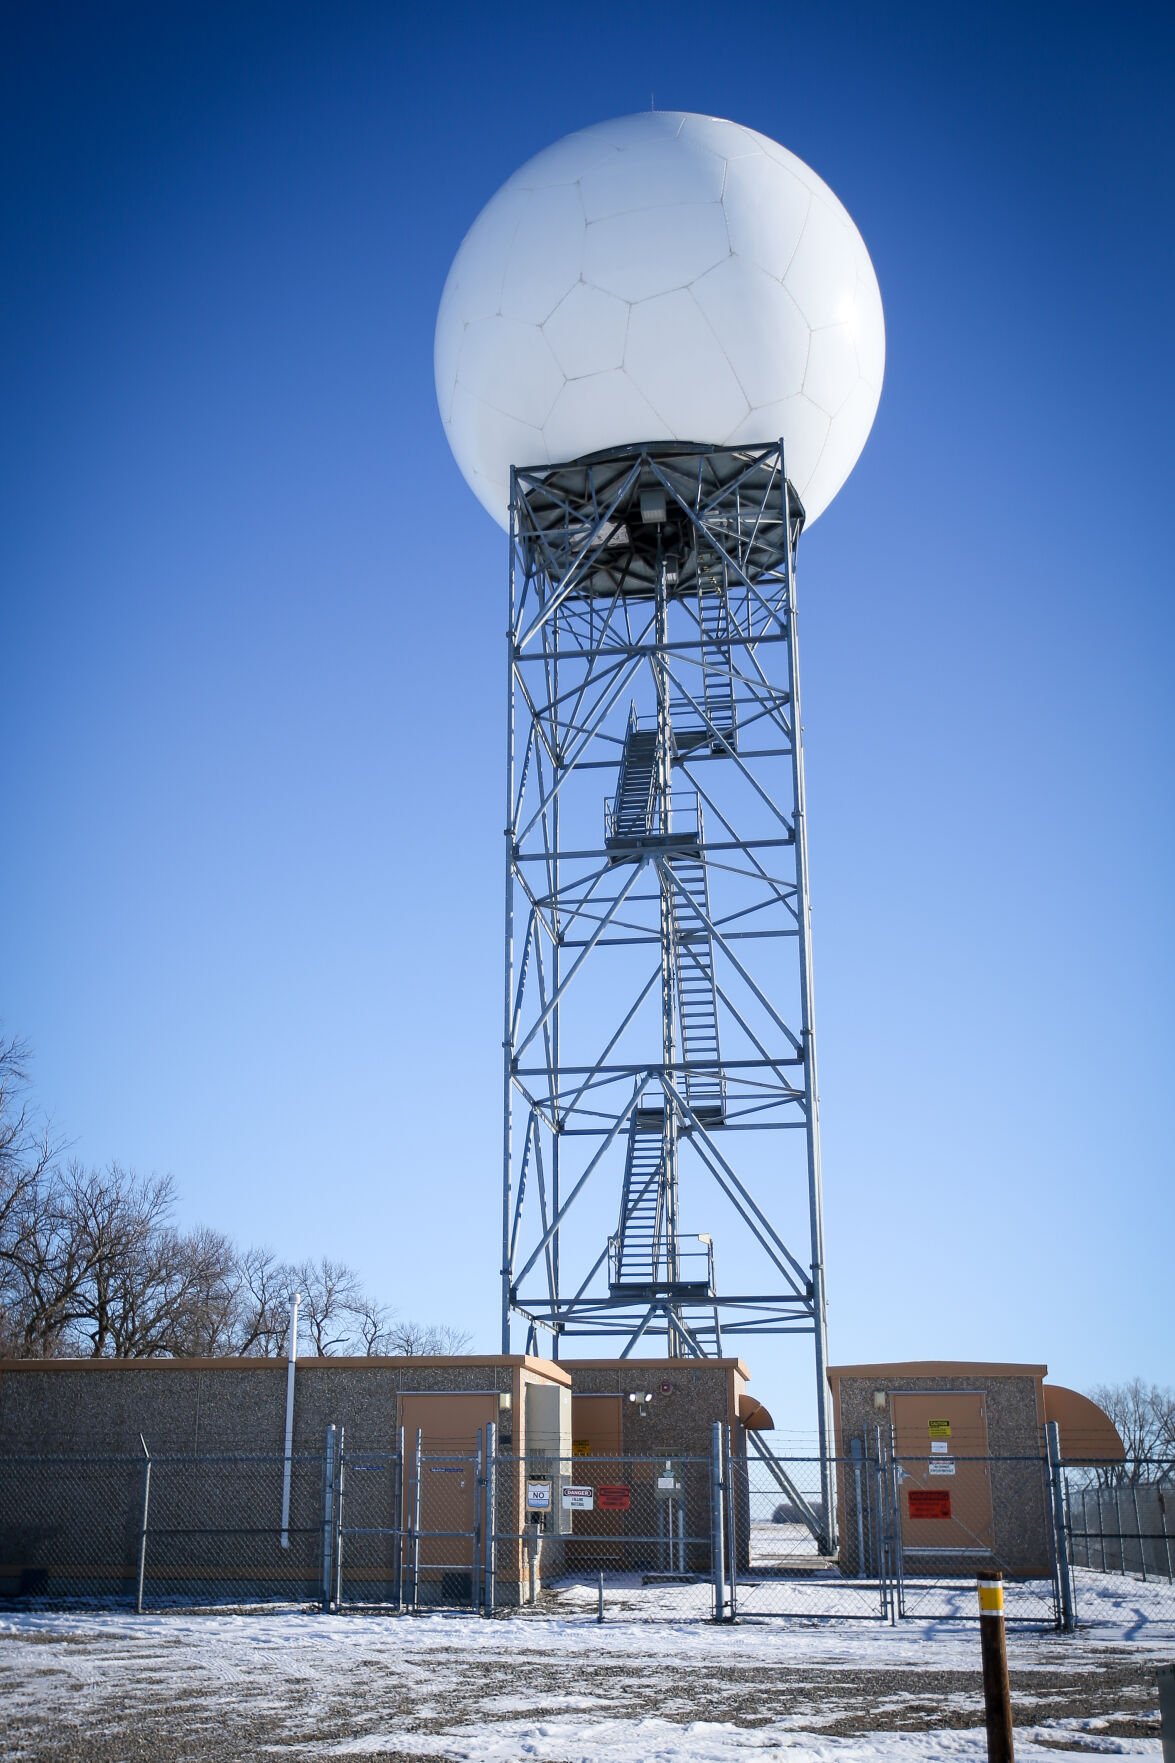 us weather service doppler radar in motion